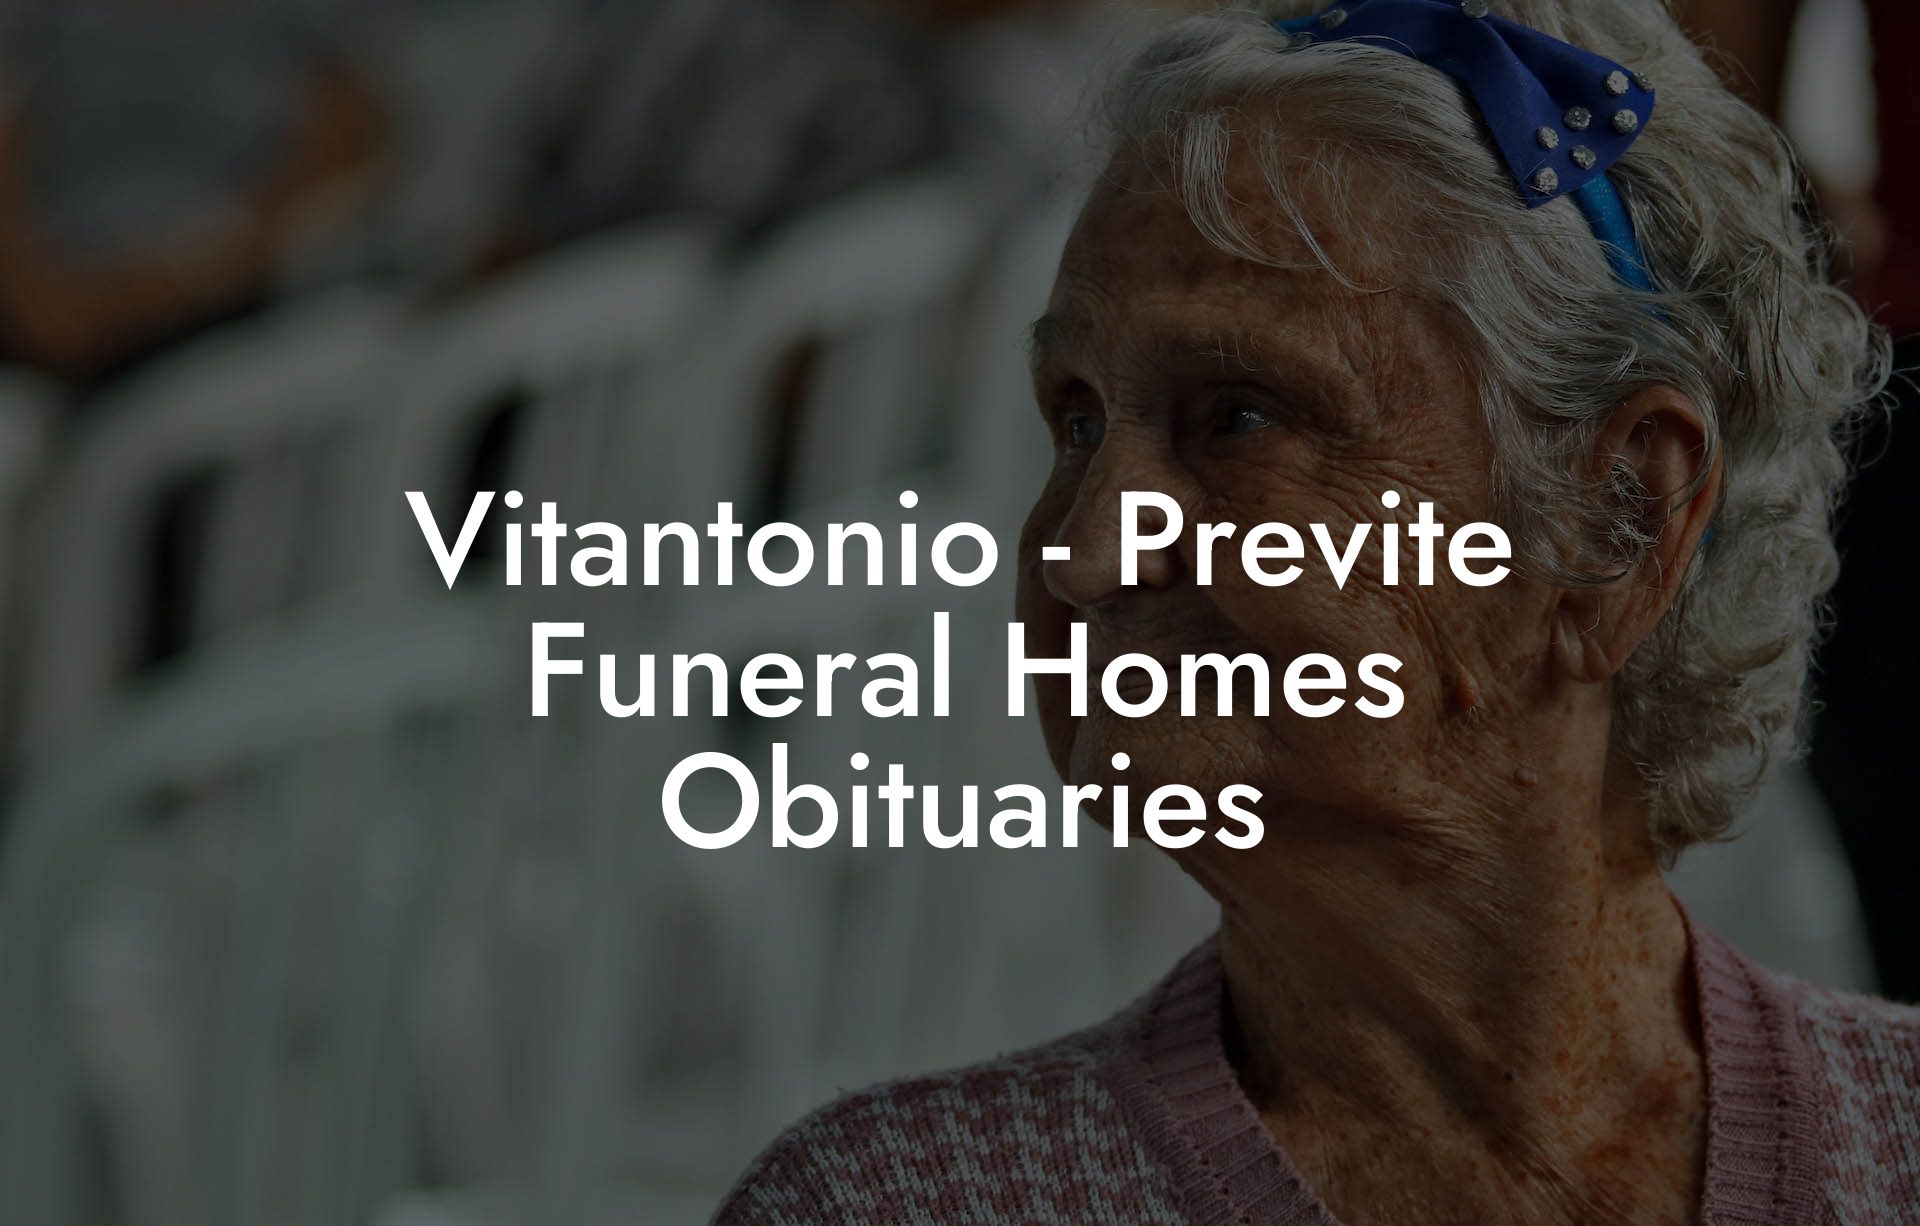 Vitantonio - Previte Funeral Homes Obituaries